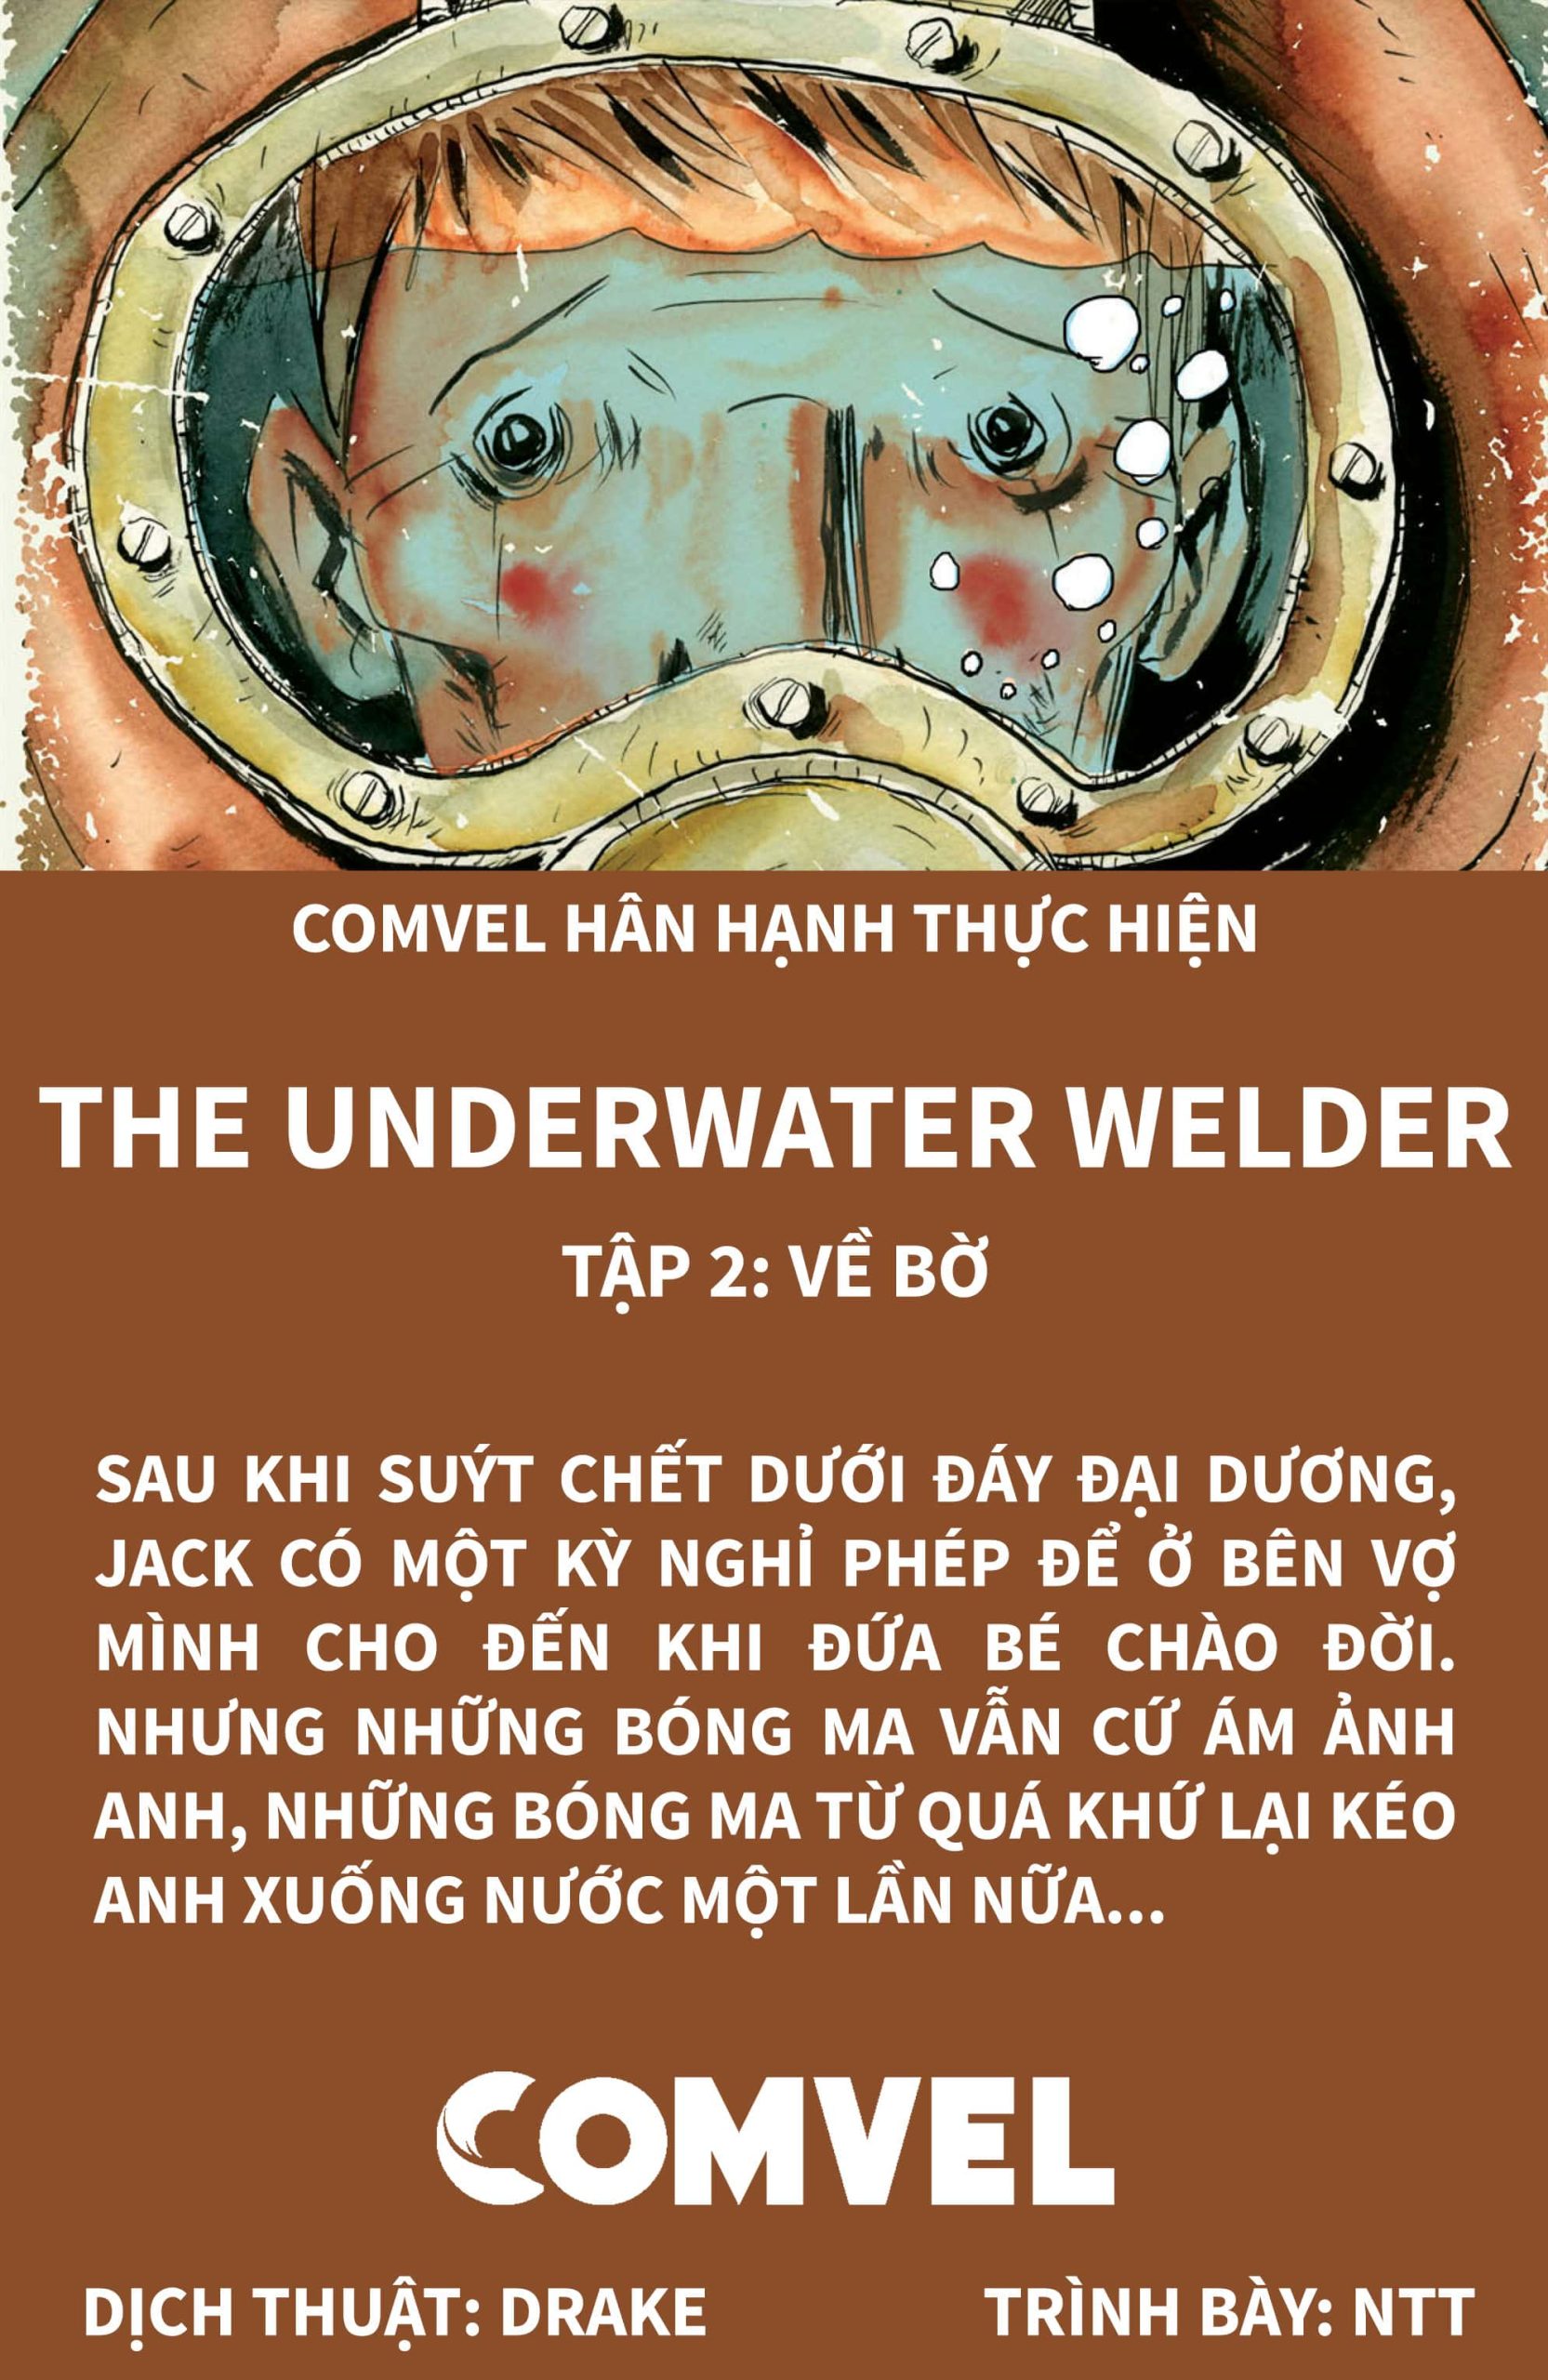 https://langgeek.net/wp-content/uploads/2021/09/The-Underwater-Welder-0-scaled.jpg